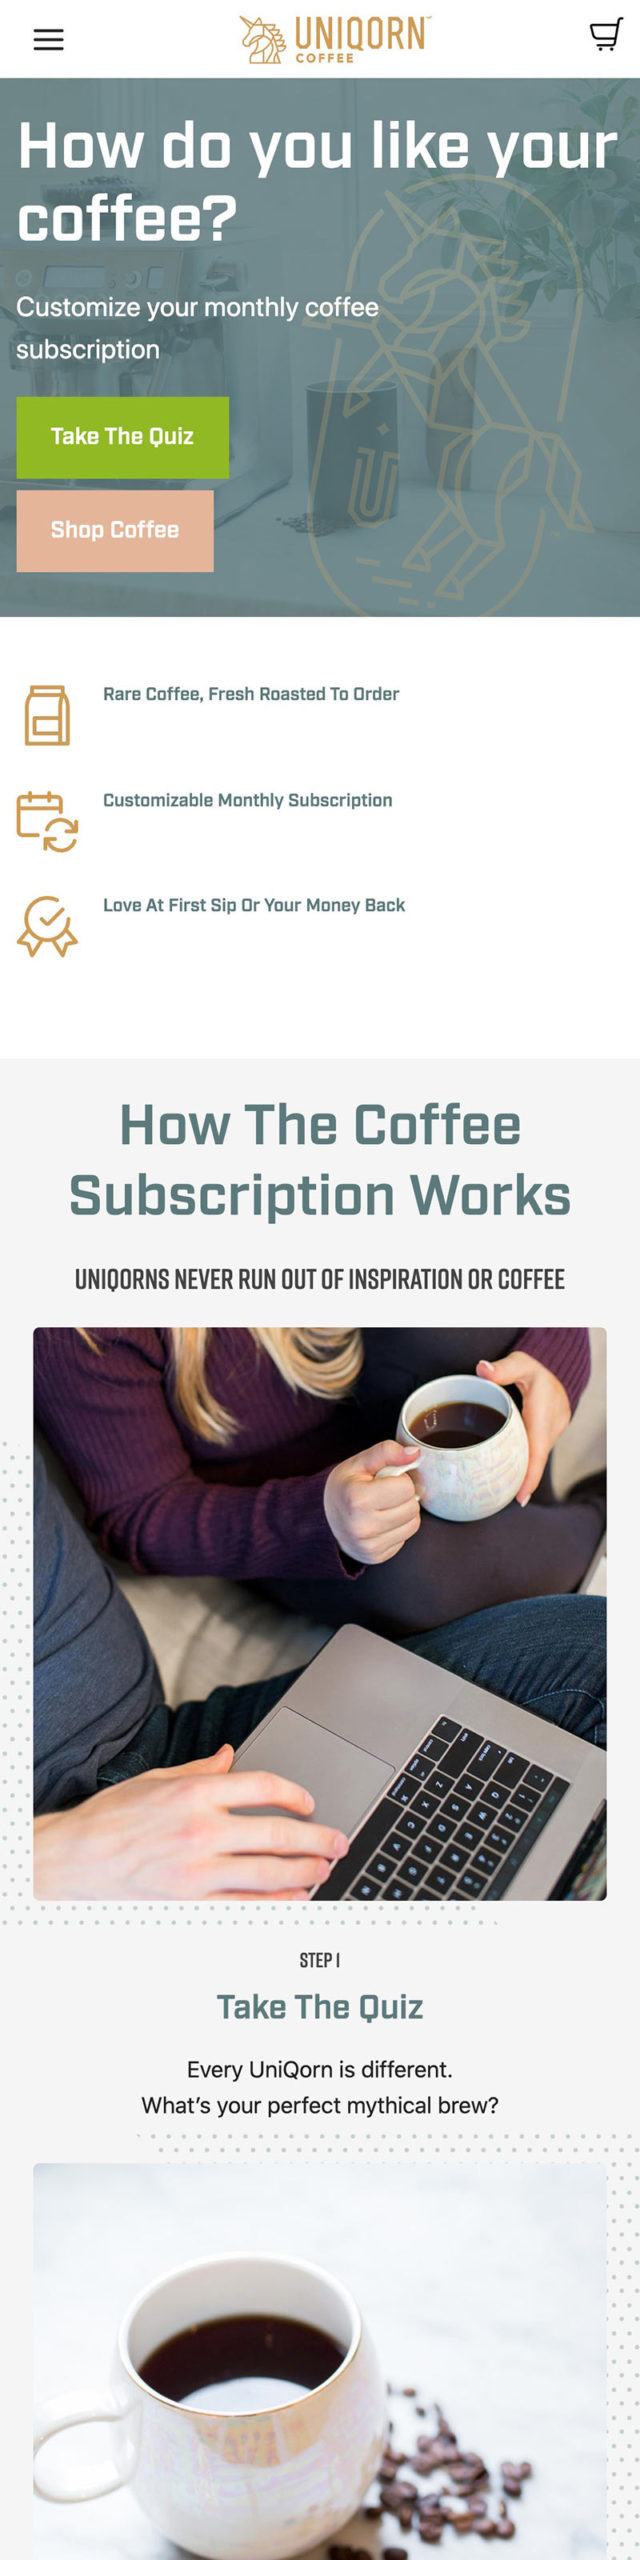 Subscription Page - UniQorn Coffee